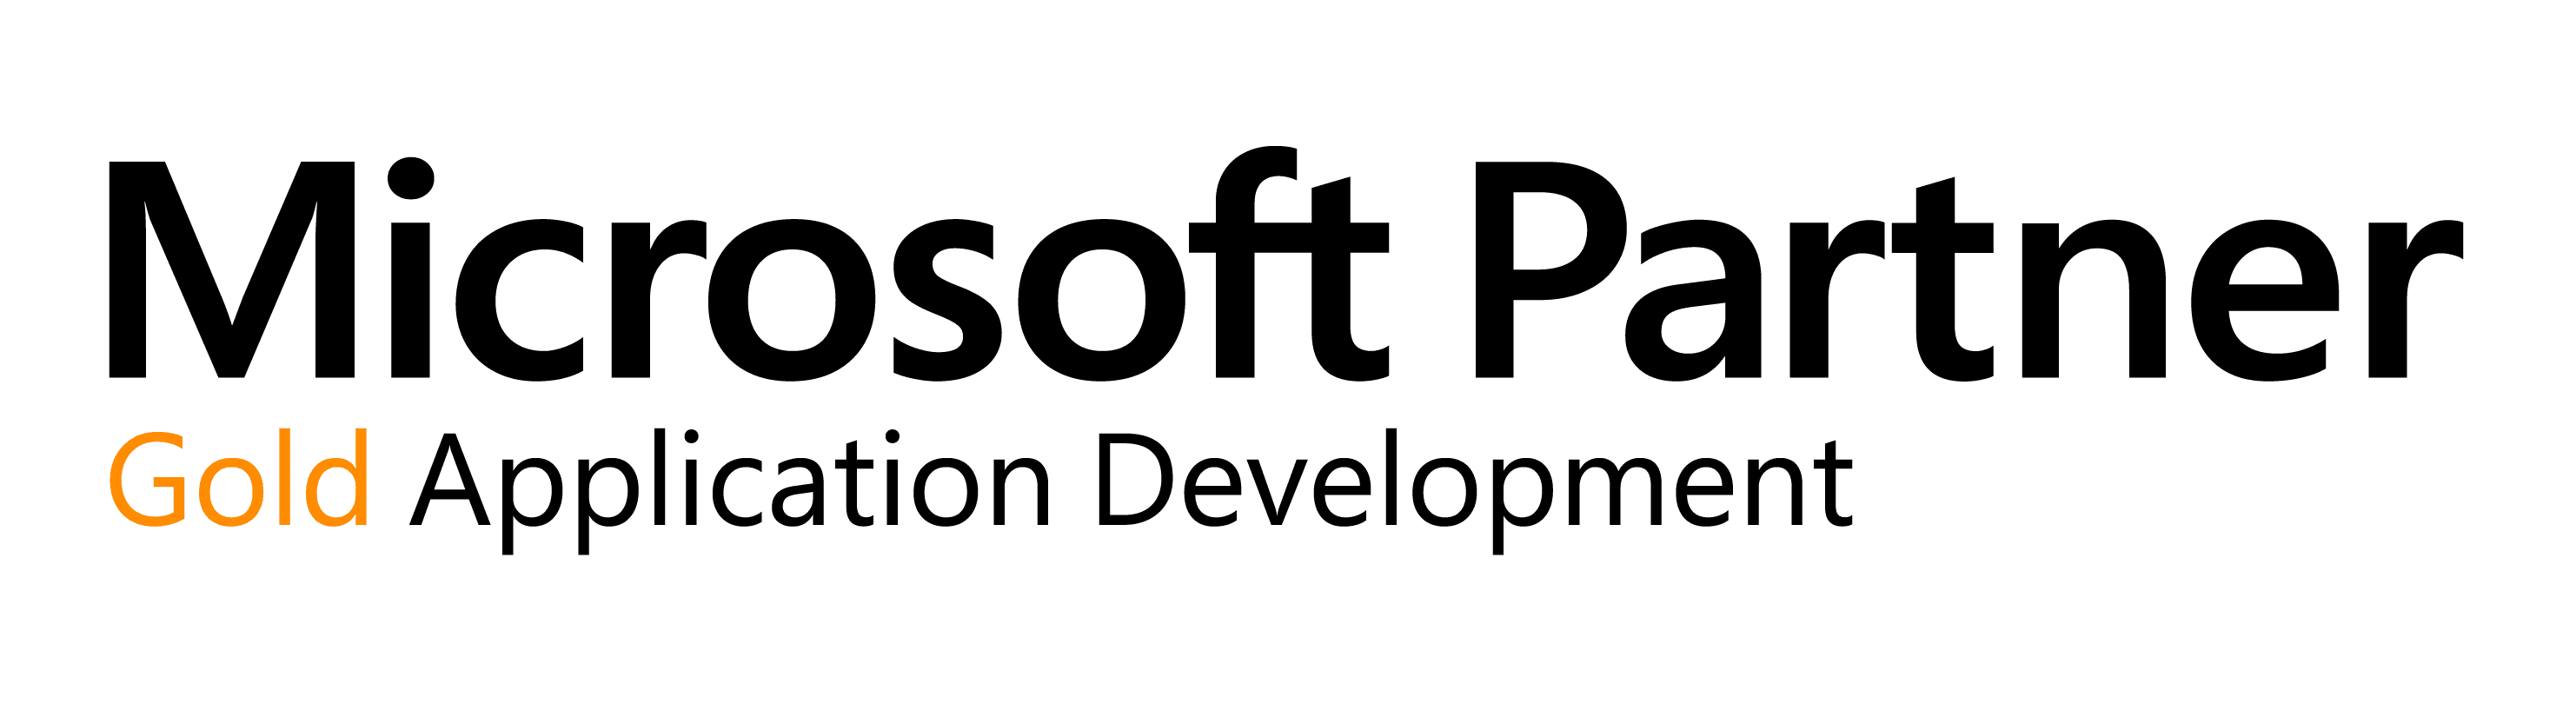 Sitecore CI Partner Badge